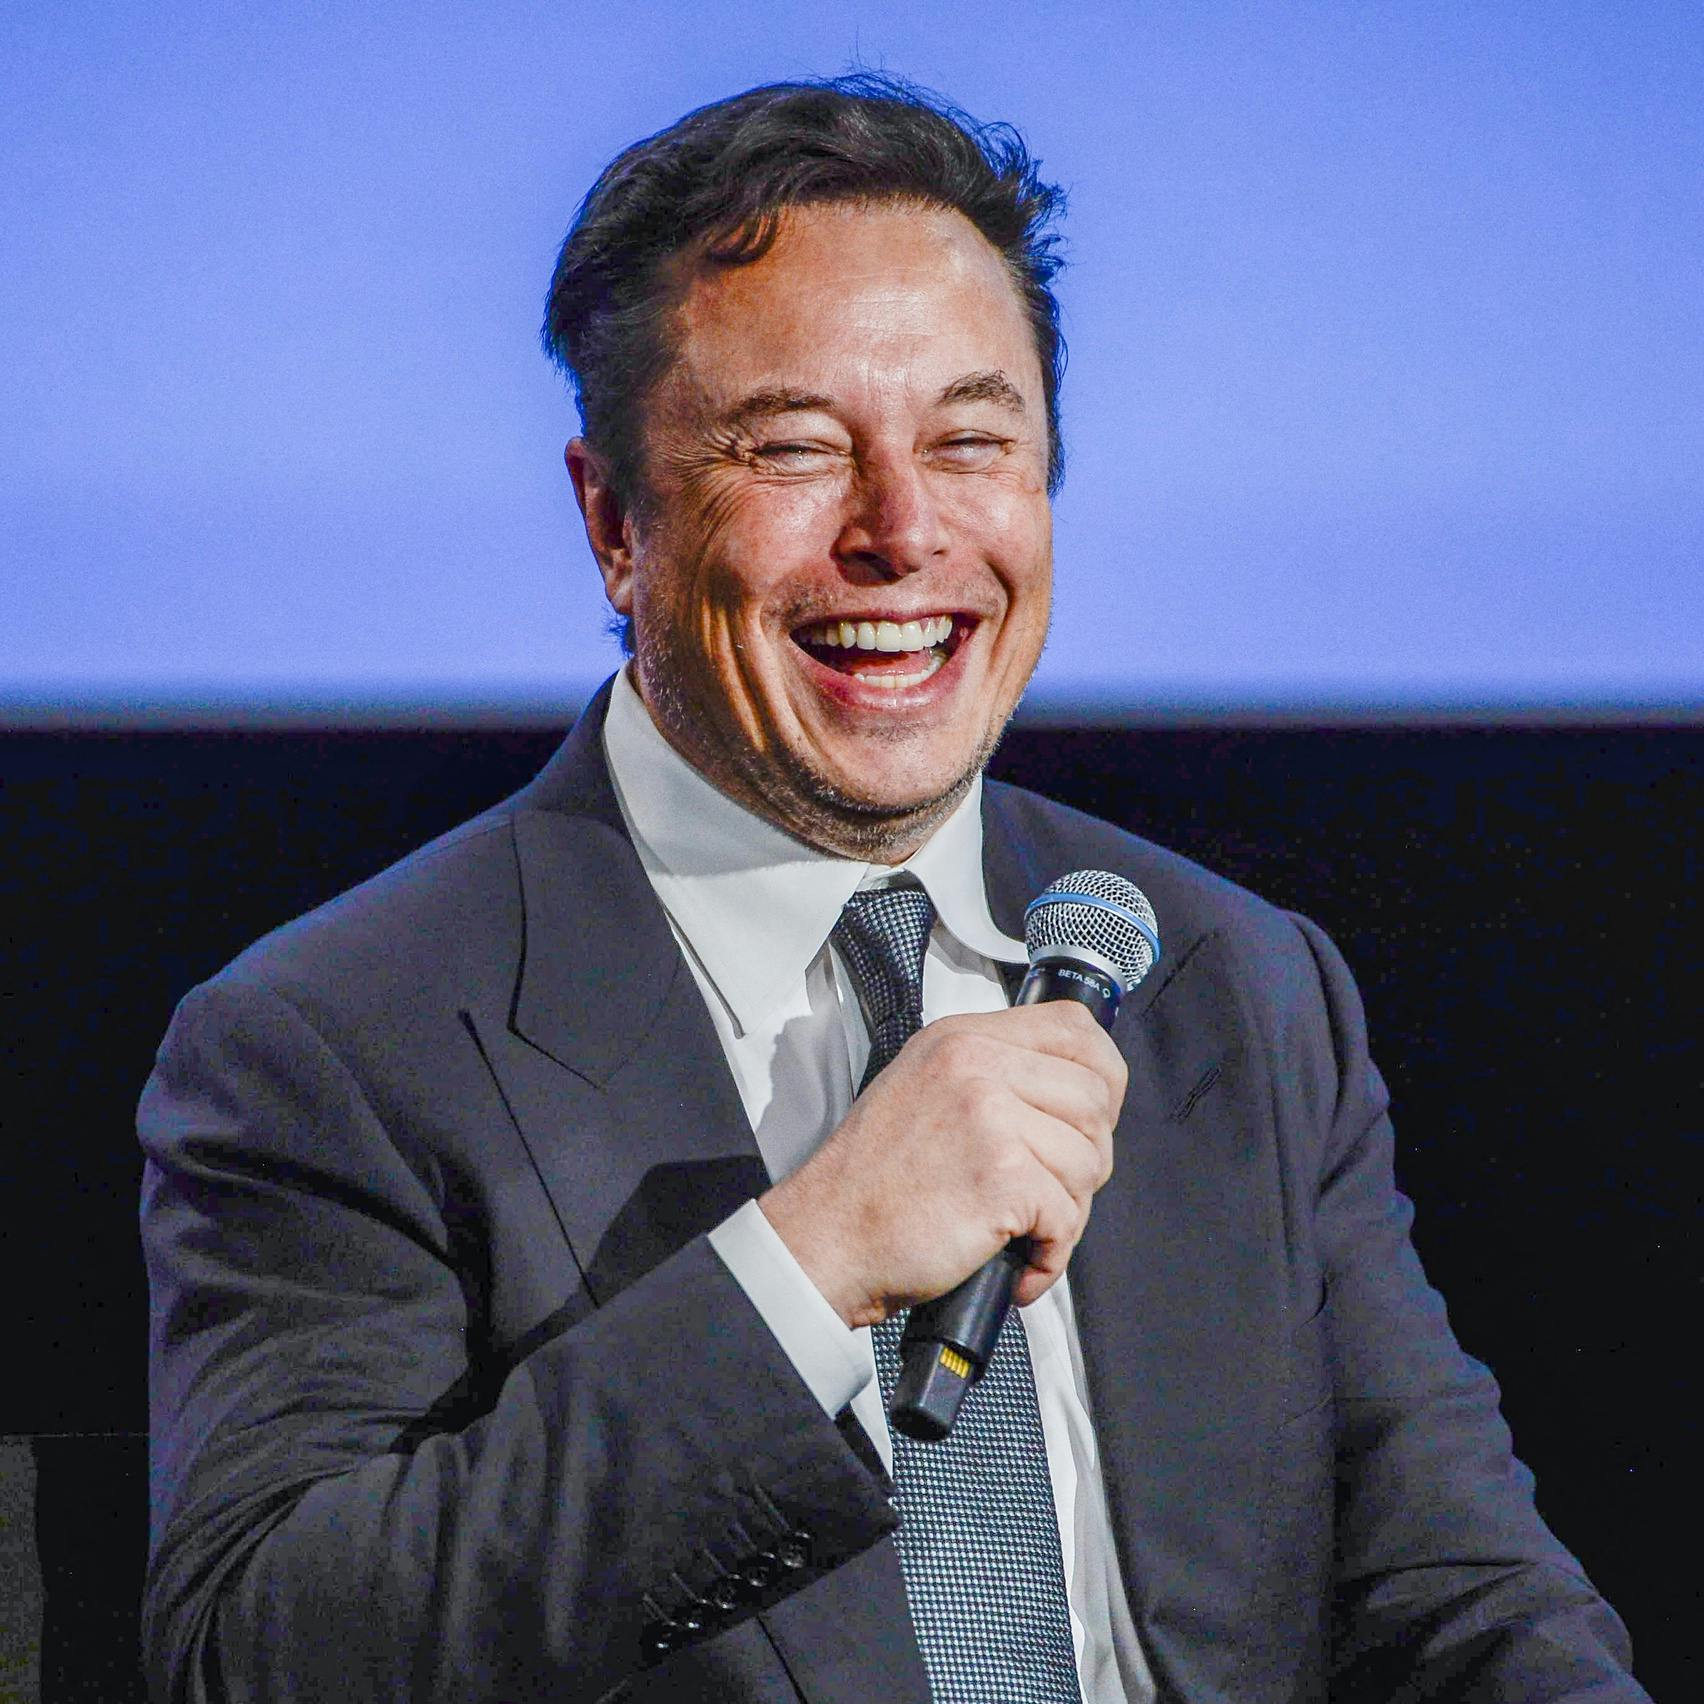 Fraudeproces tegen Elon Musk van start